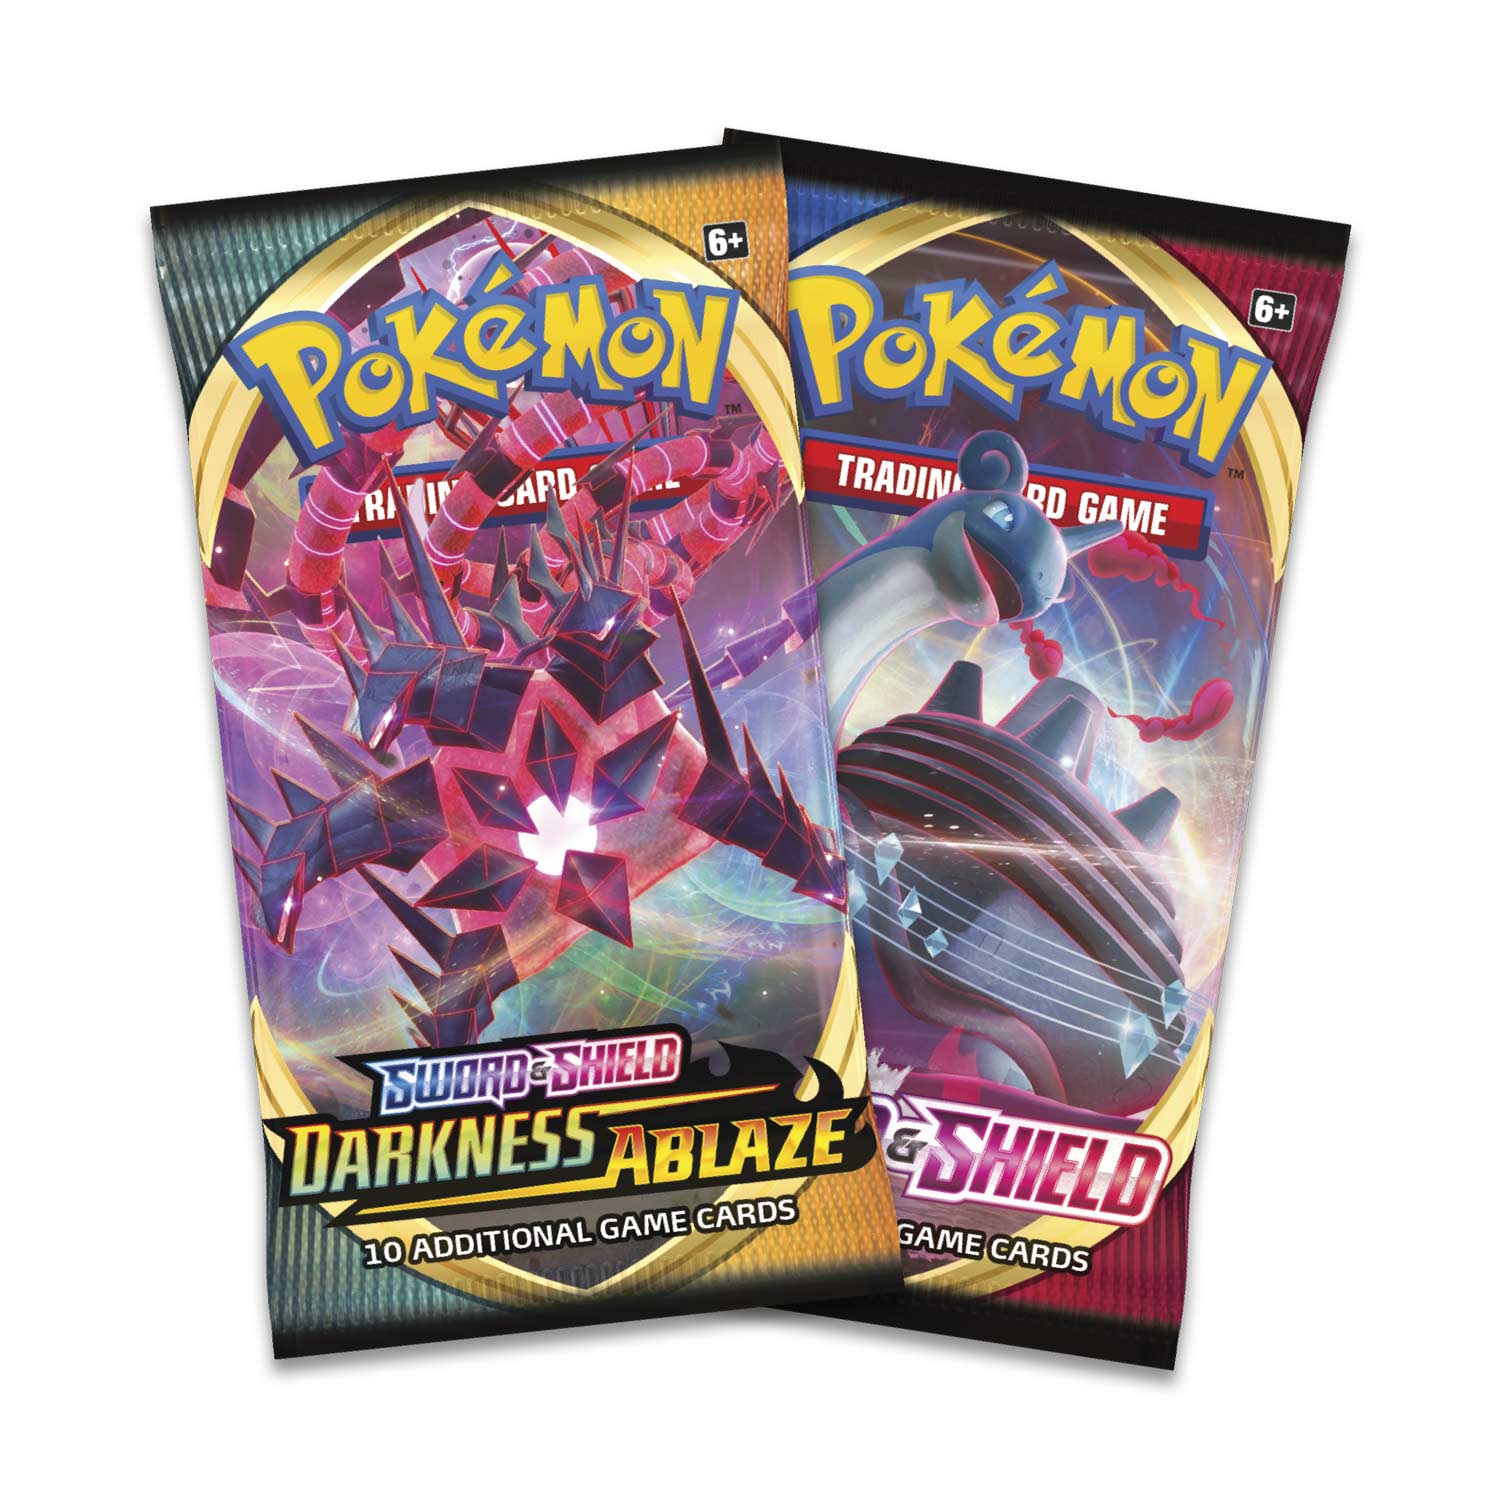 1x Sword & Shield Darkness Ablaze Booster Pack Pokemon TCG Buy 10 Get 1 Free 